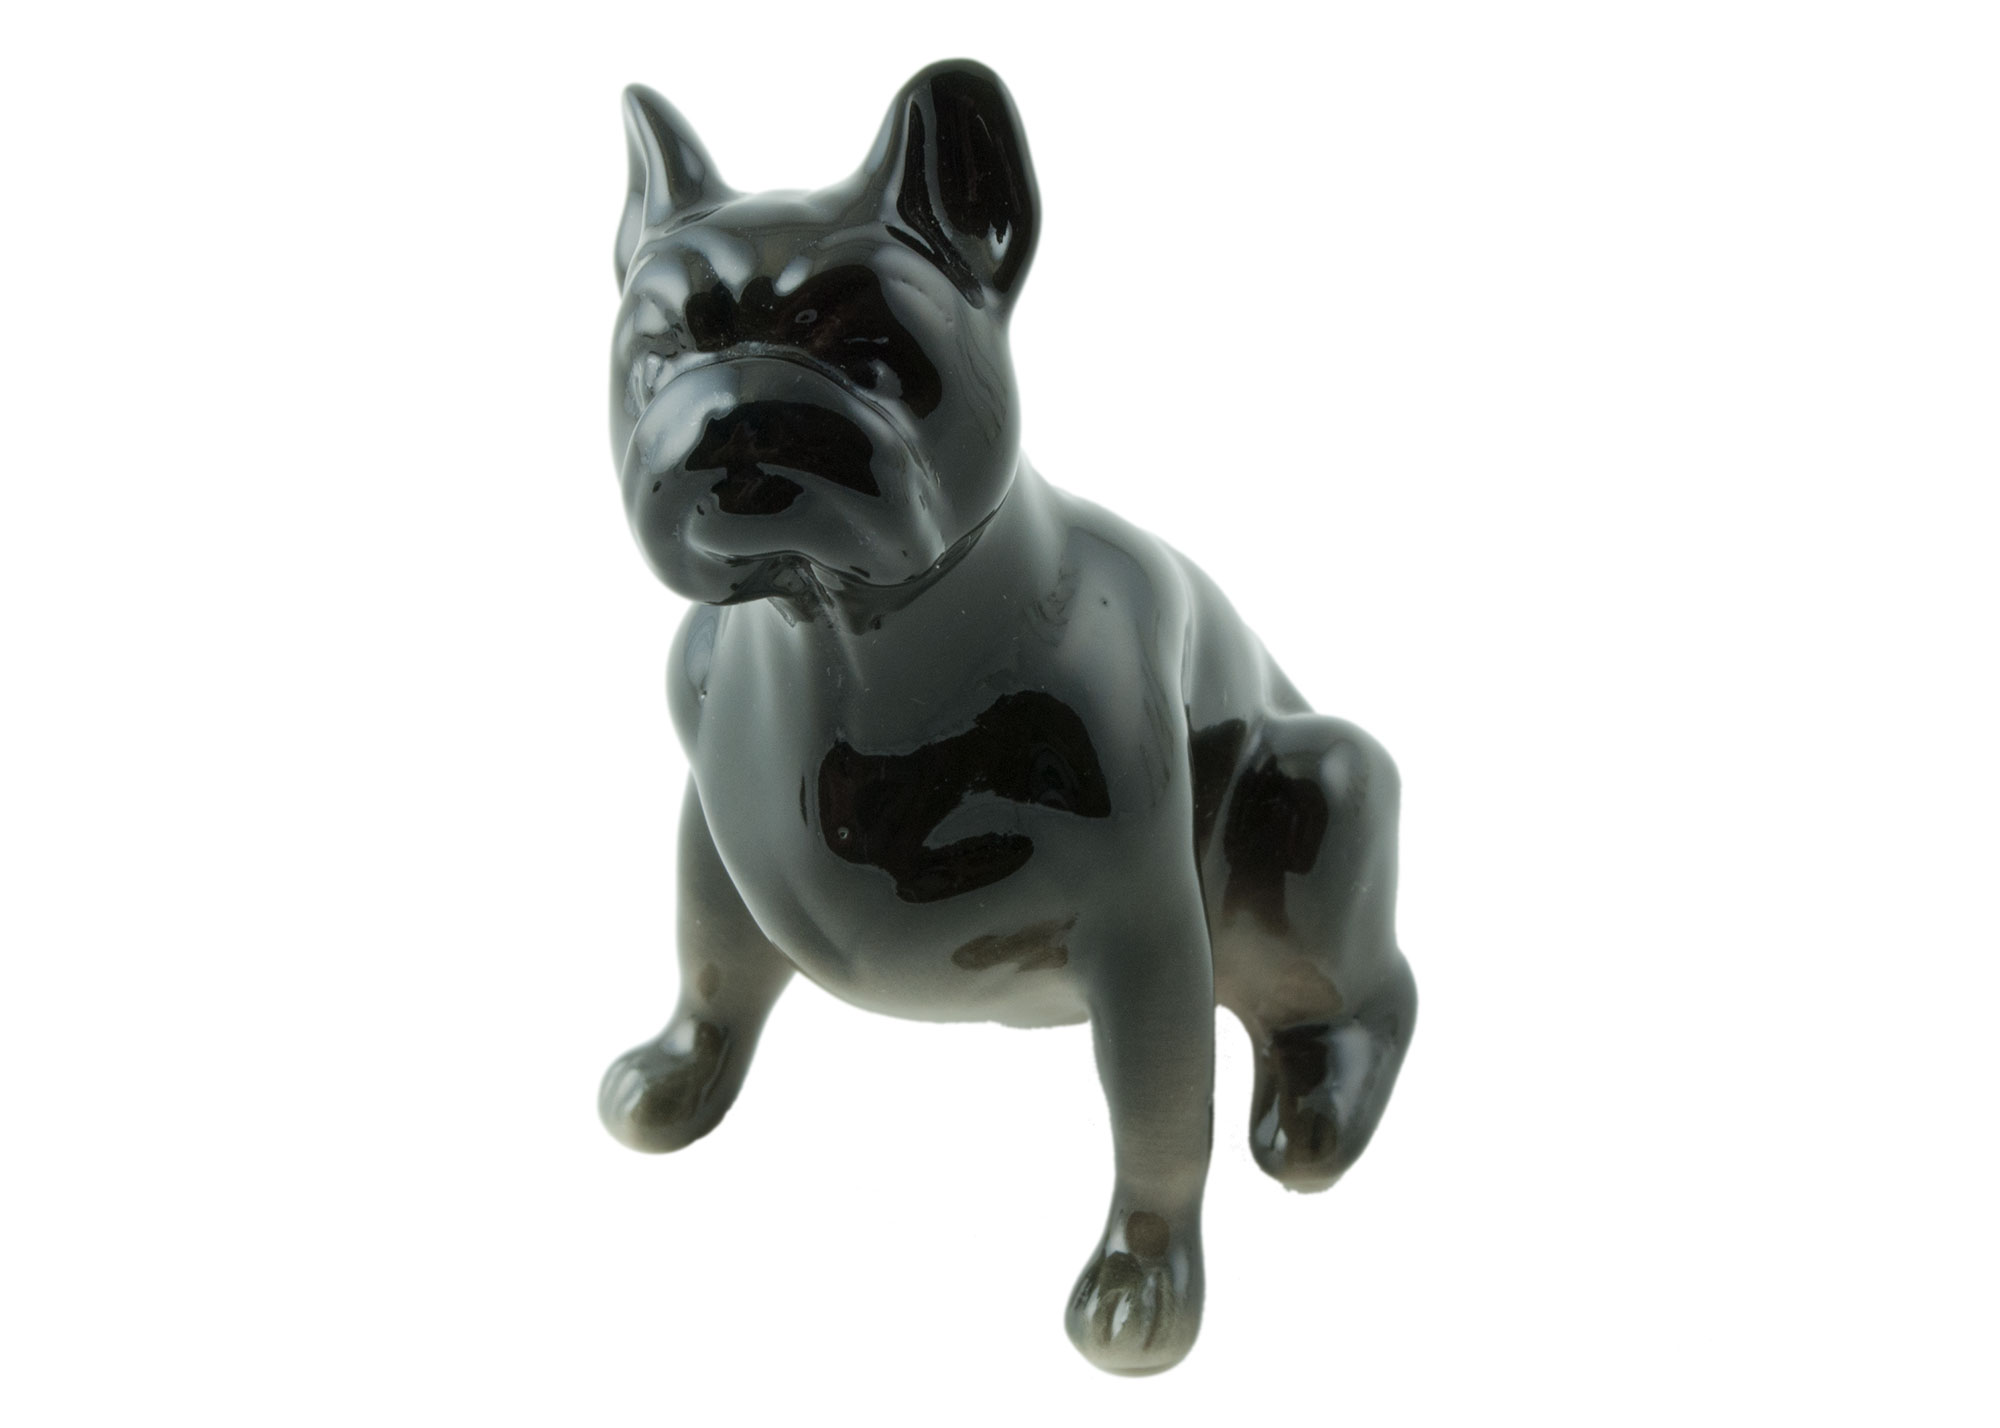 Buy French Bulldog Porcelain Figurine at GoldenCockerel.com